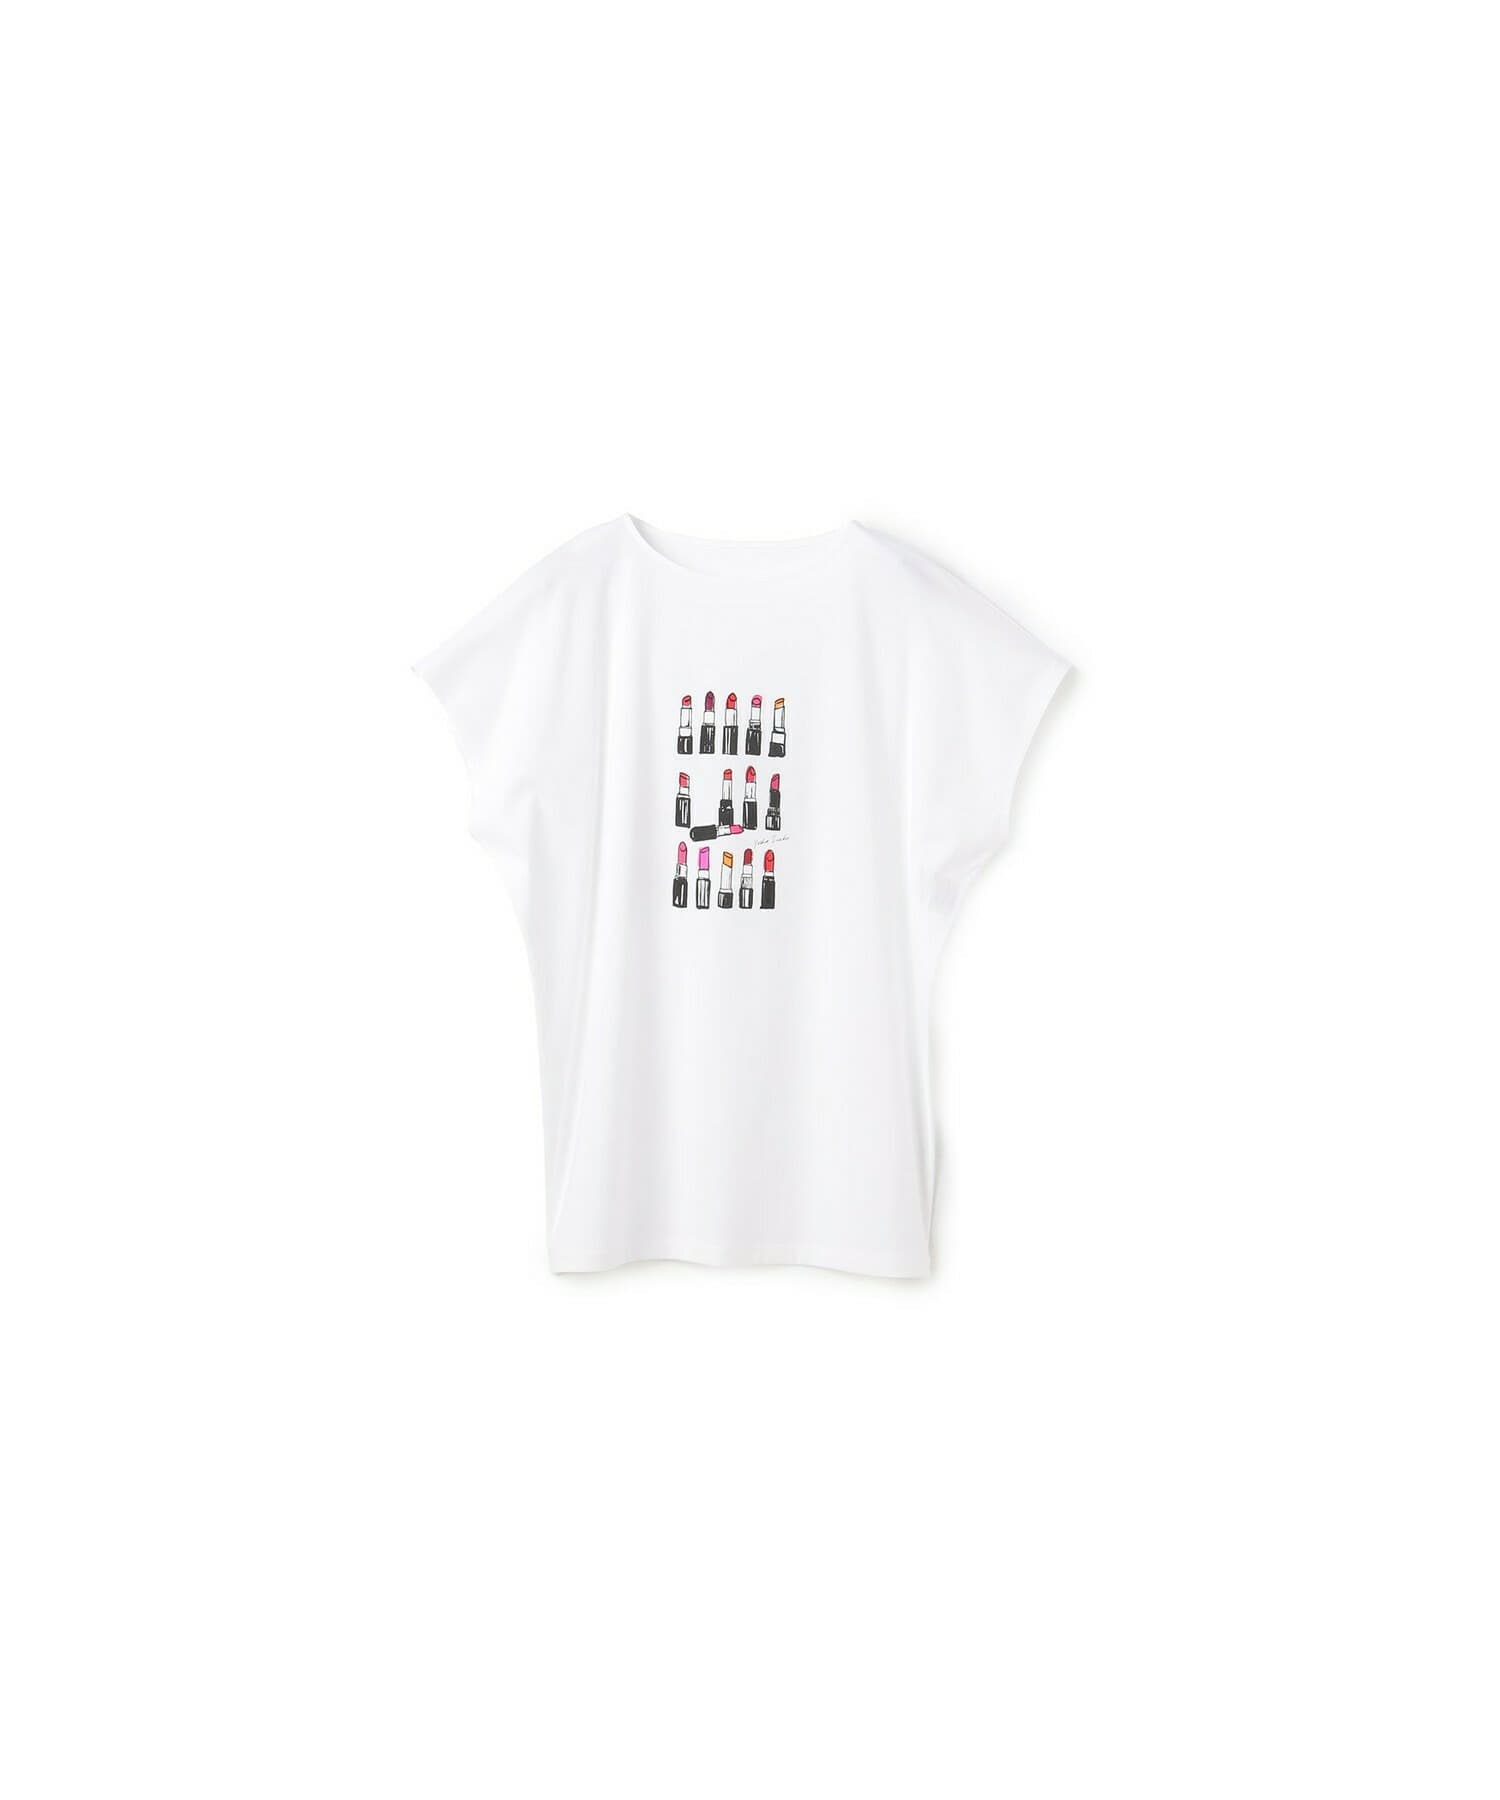 【yoshie inaba】コットンライトスムースリップスティック柄Tシャツ 詳細画像 ホワイト 1